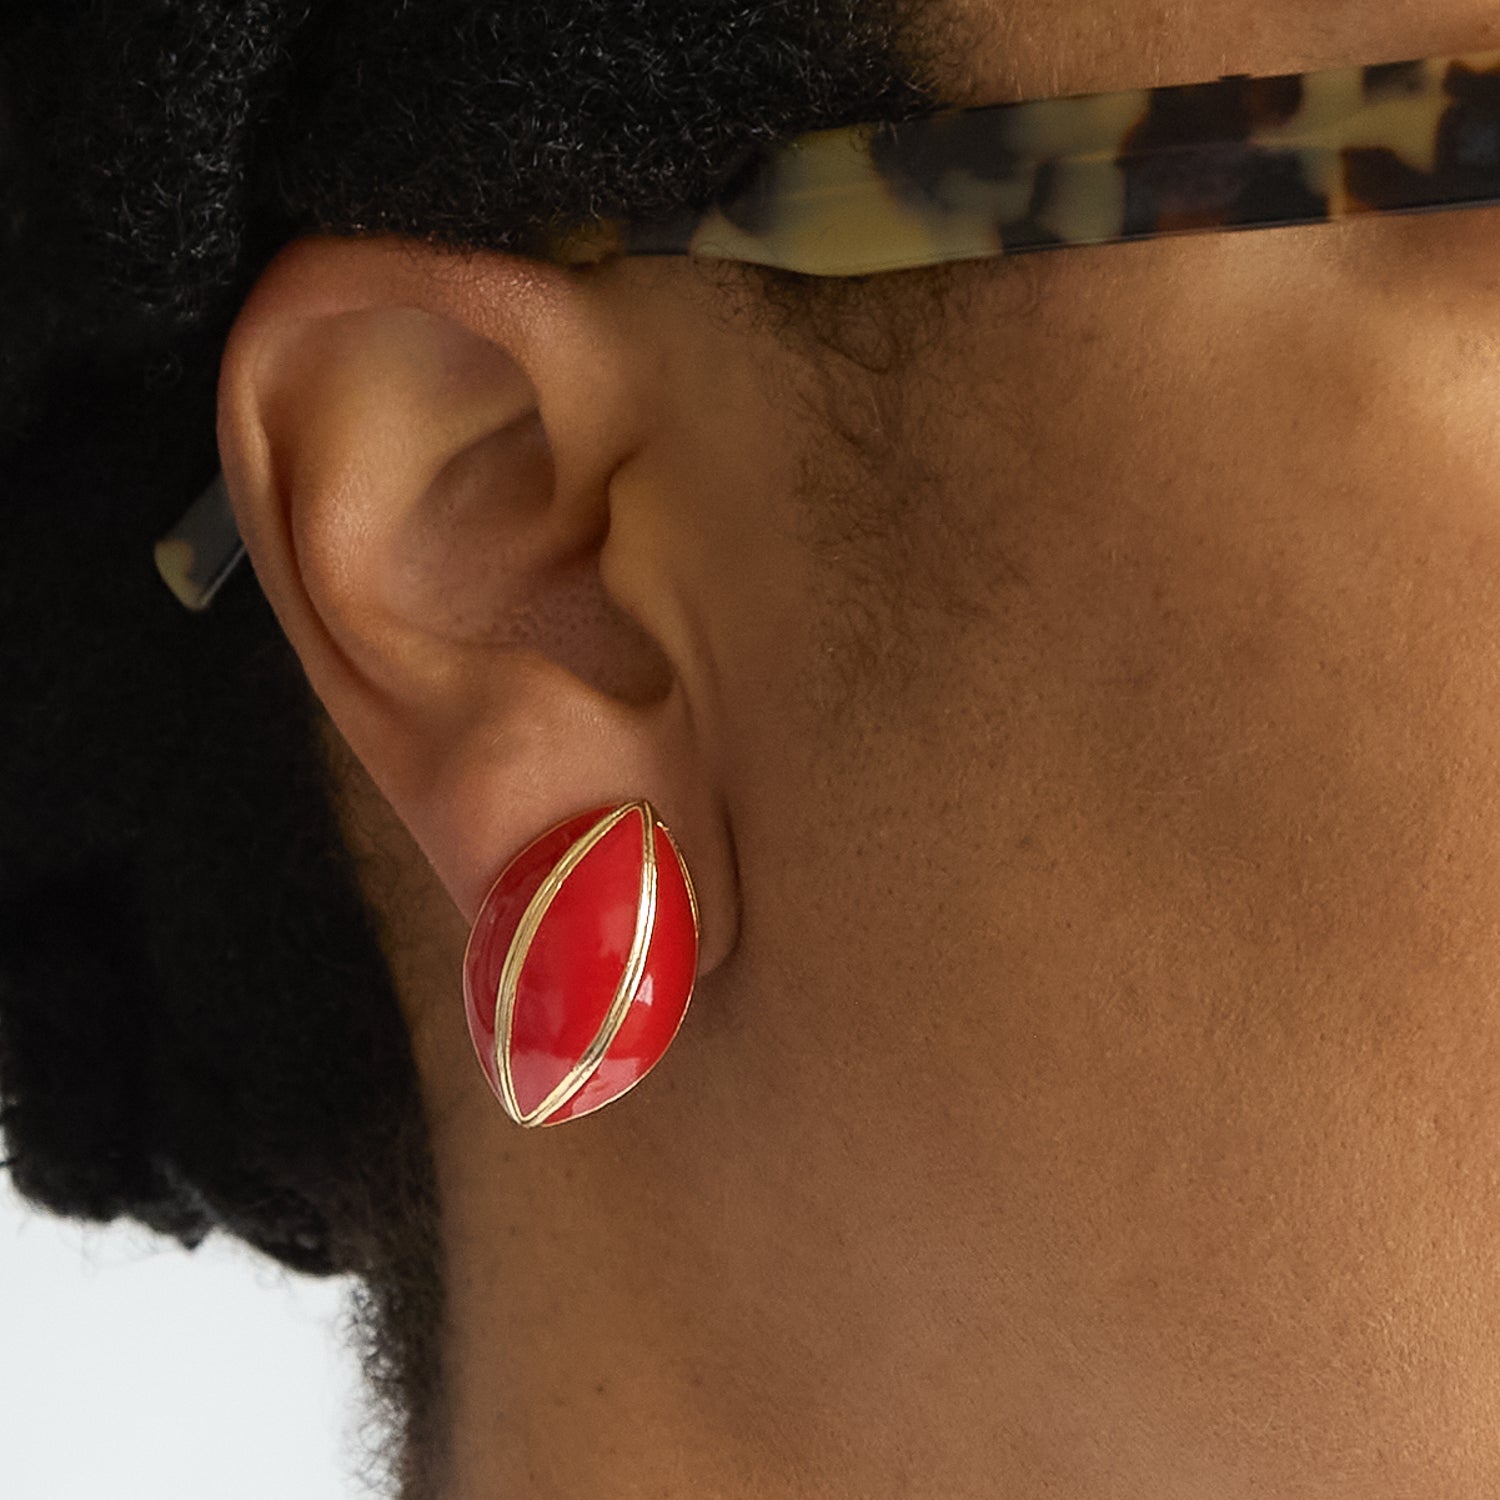 Vintage Red and Gold Teardrop Earrings